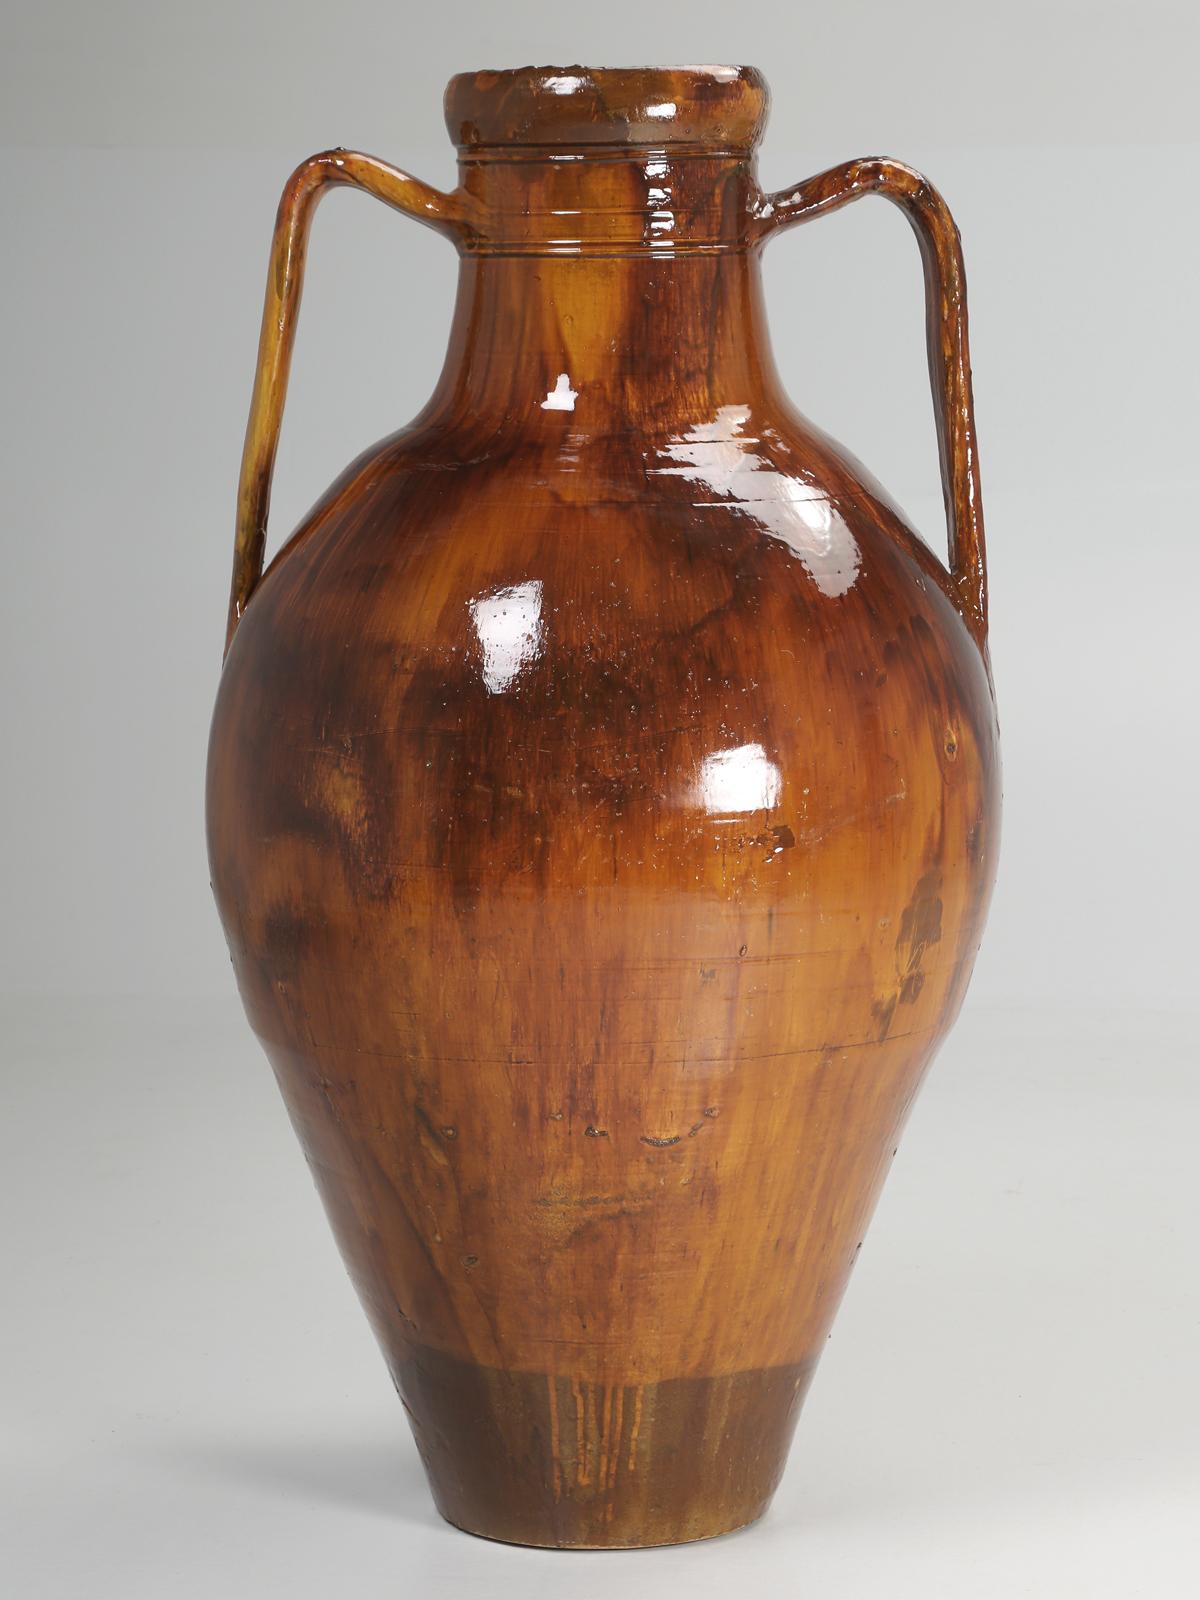 Country Antique Huge Italian Olive Oil Jar or Amphora in Great Color Palette